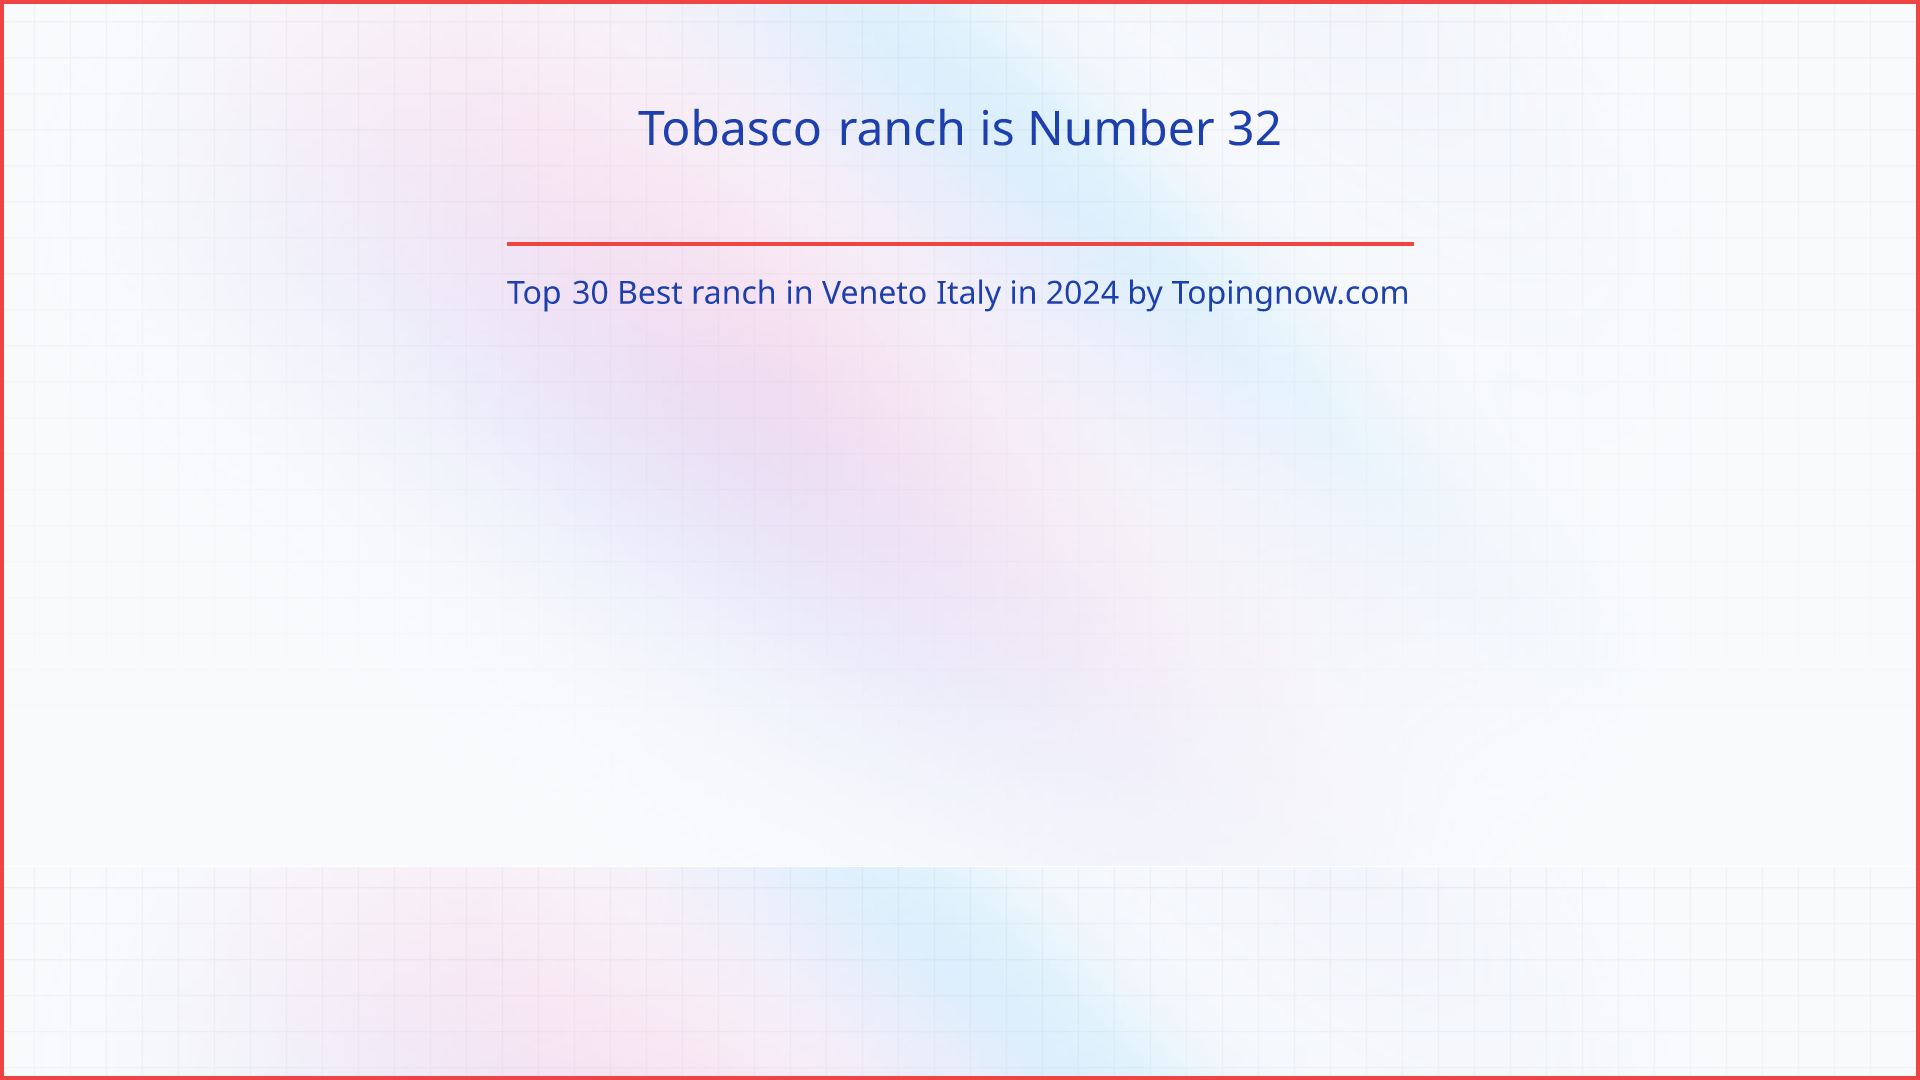 Tobasco ranch: Top 30 Best ranch in Veneto Italy in 2024